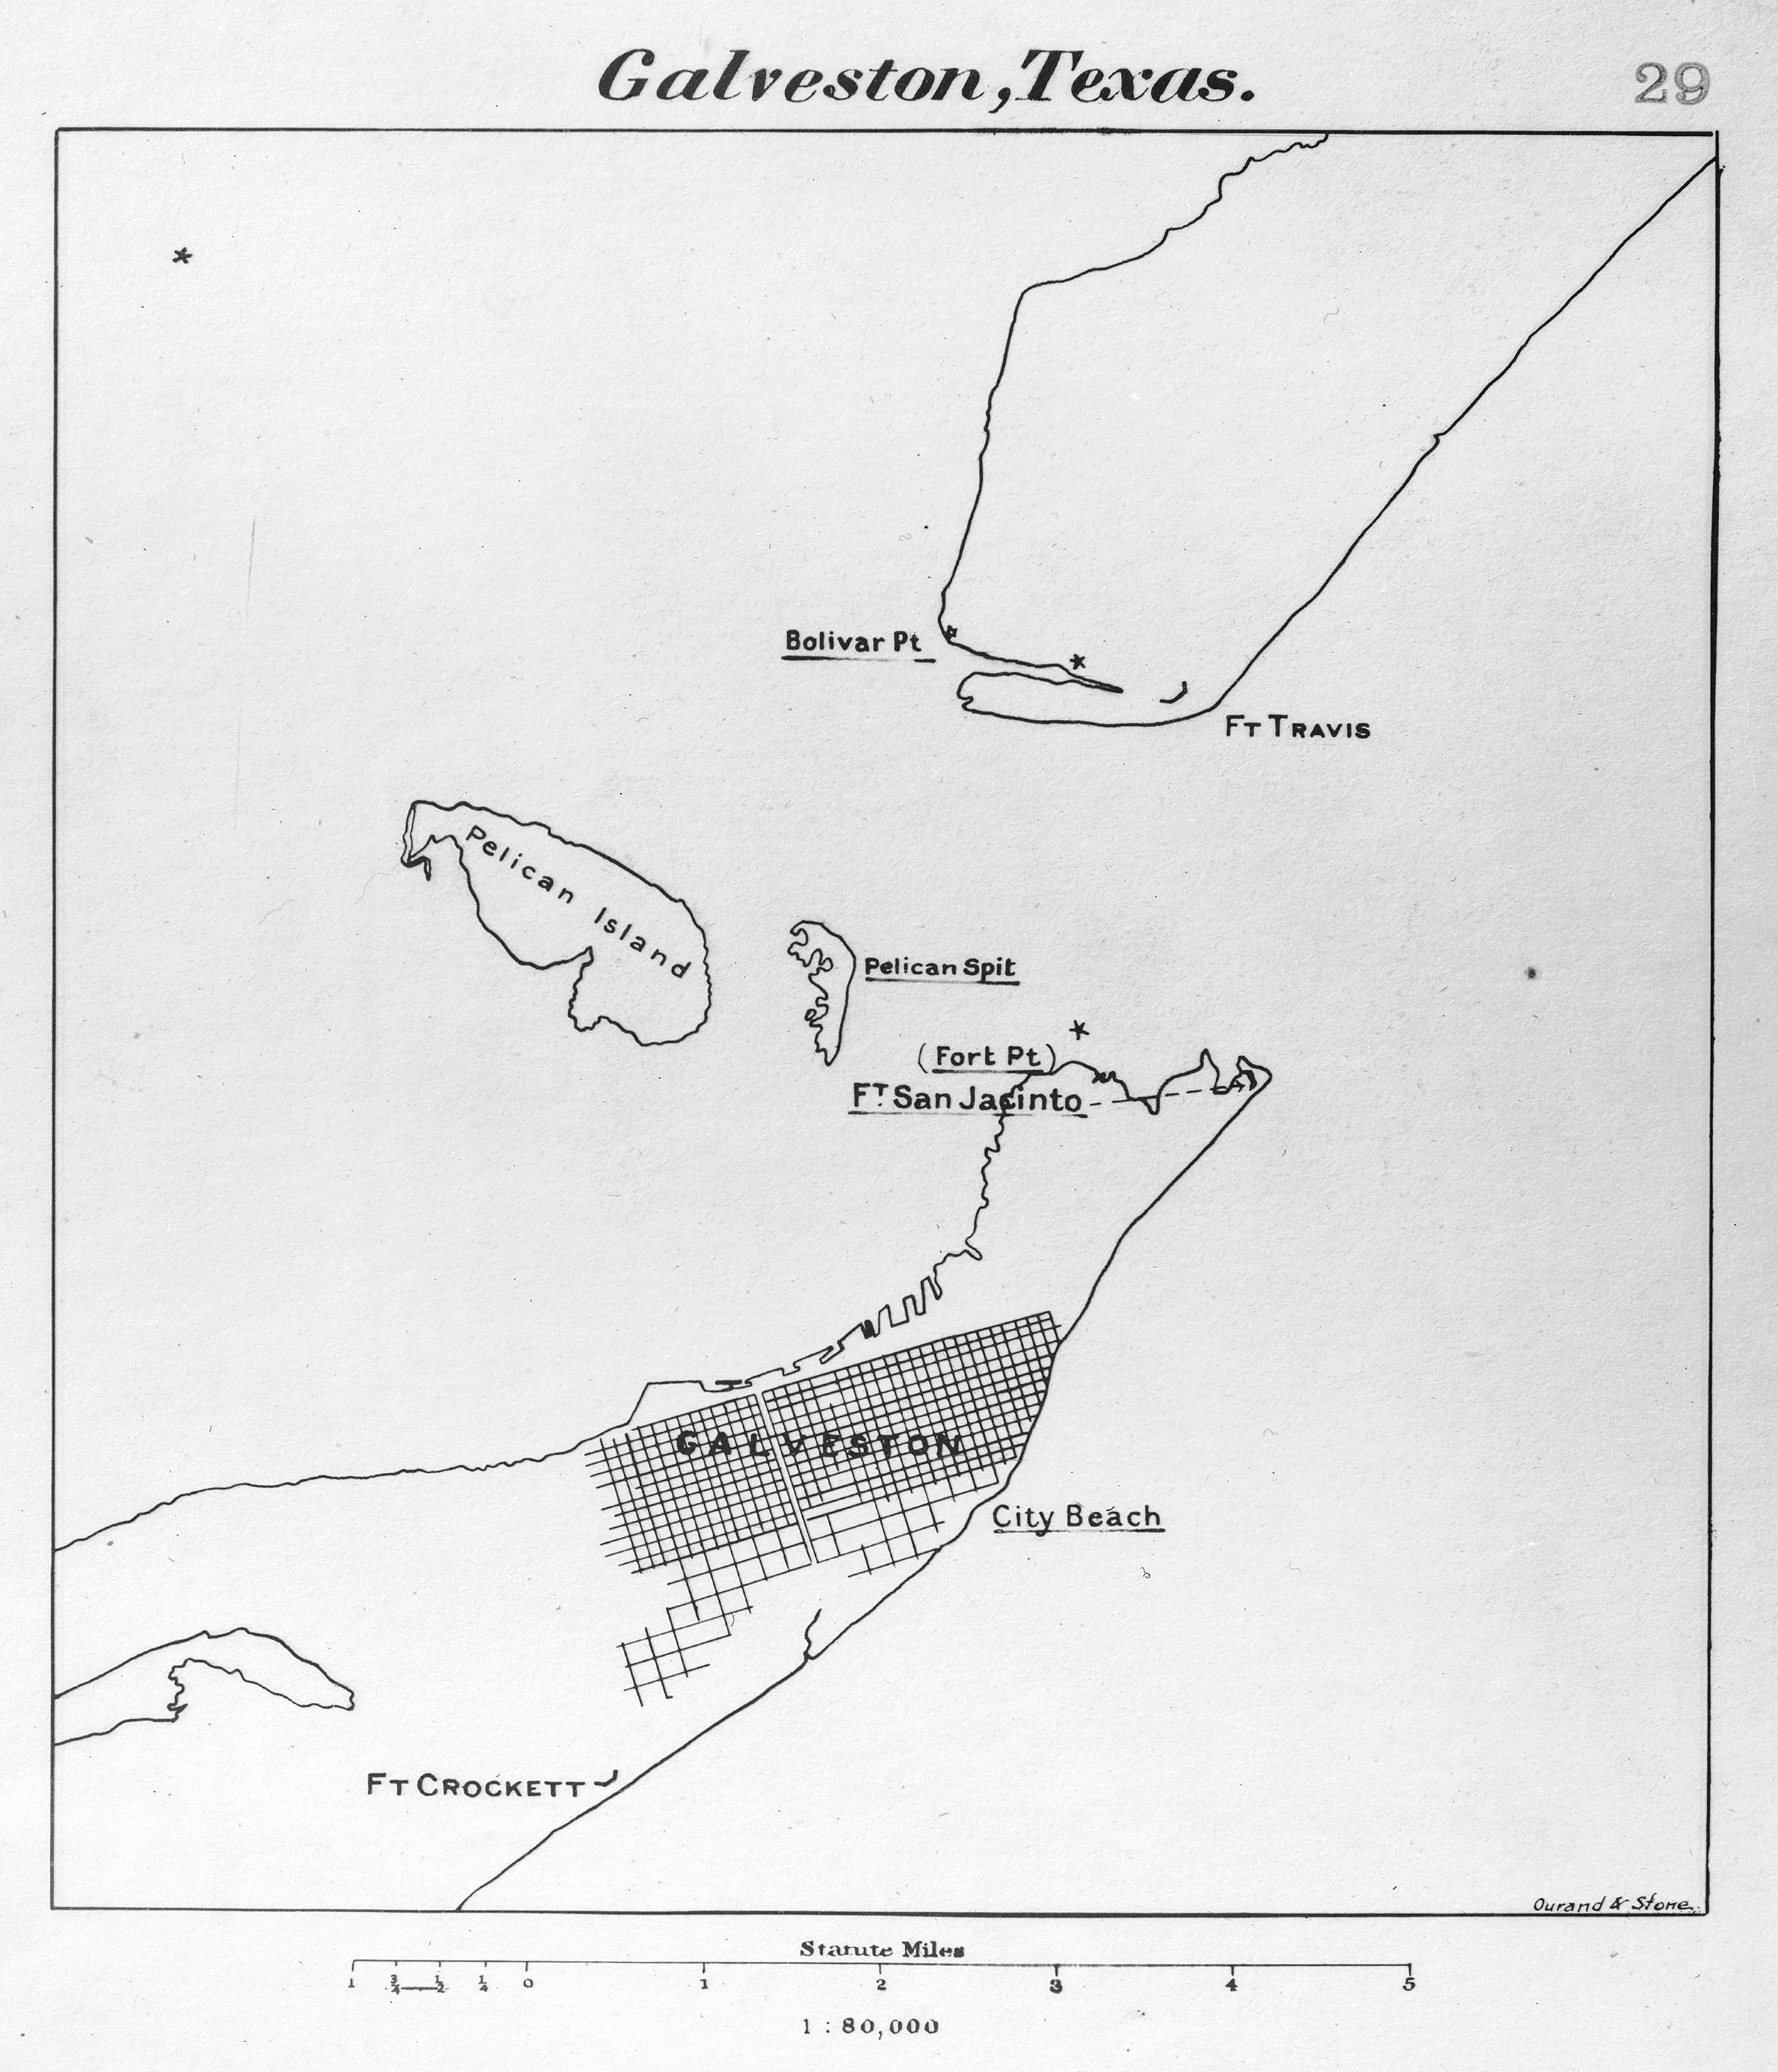 Simple map of Galveston harbor